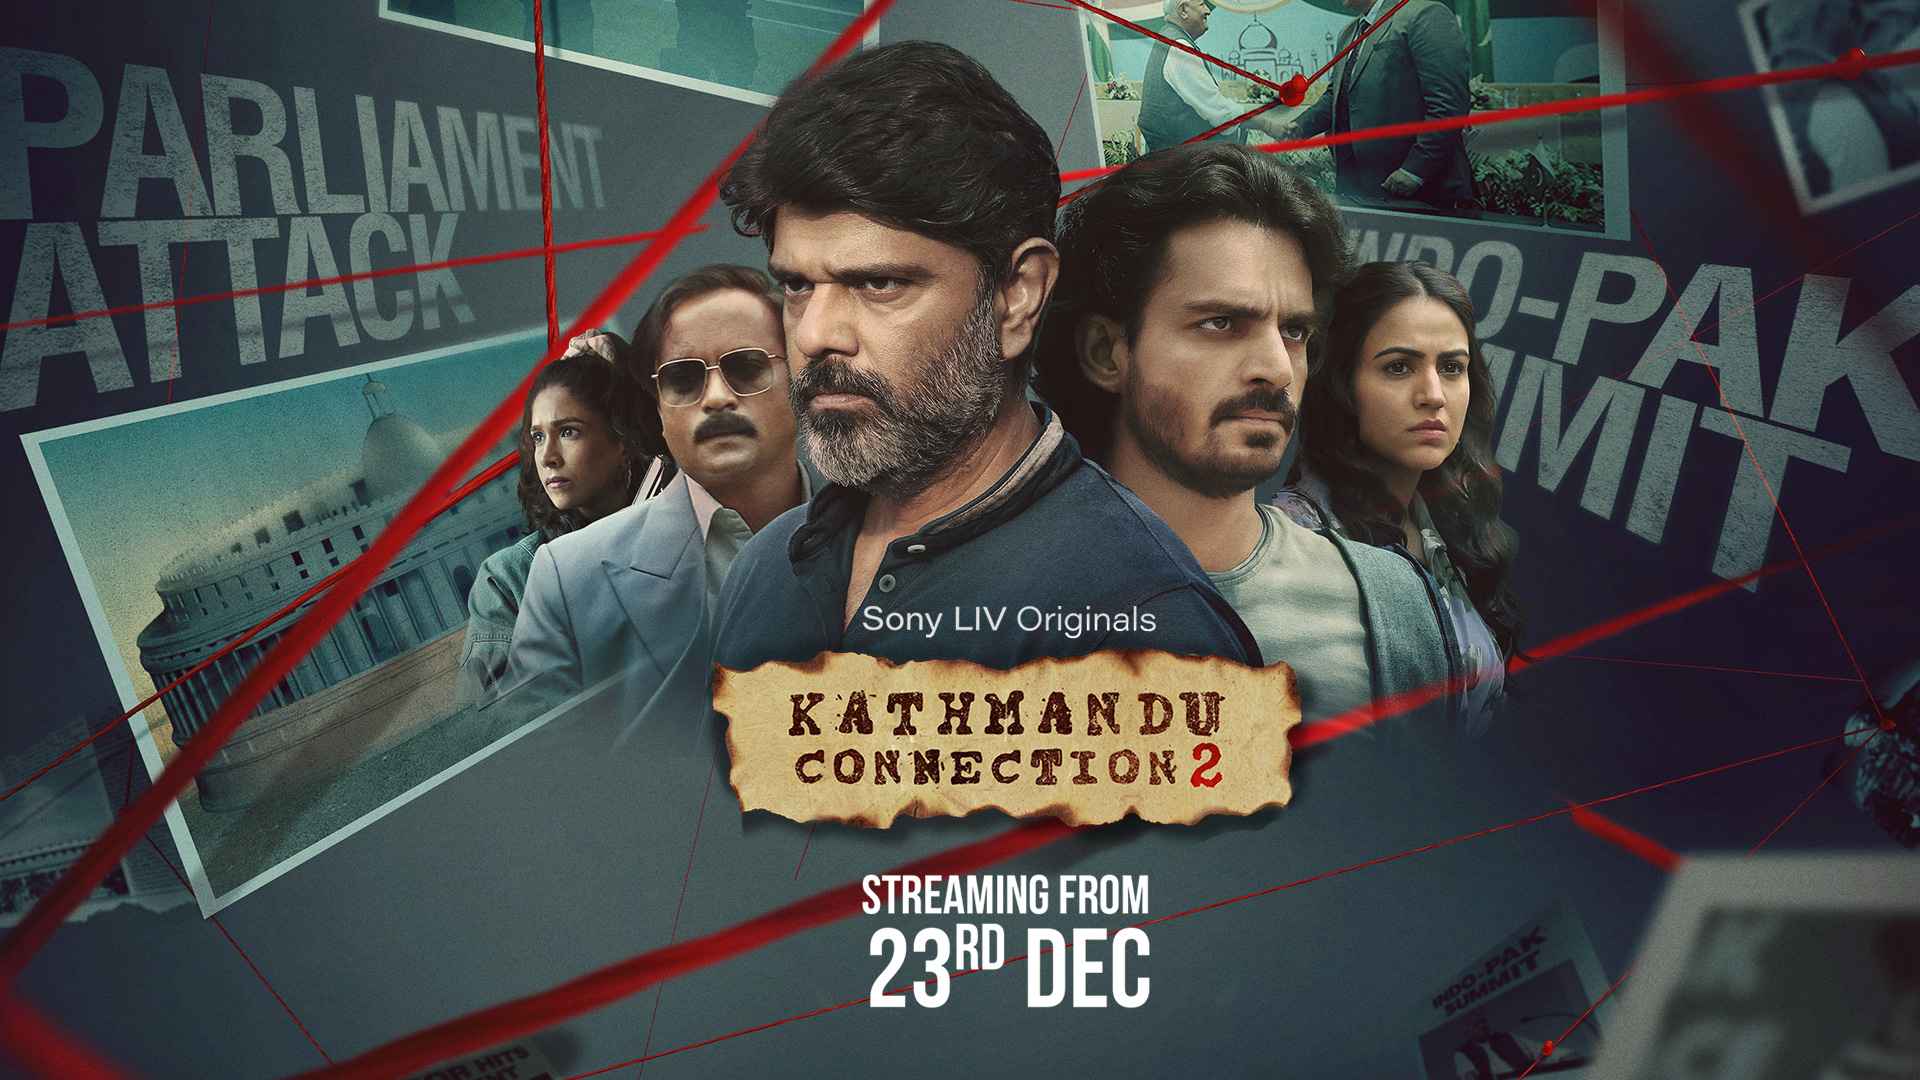 How to Watch Kathmandu Connection Season 2 Online?